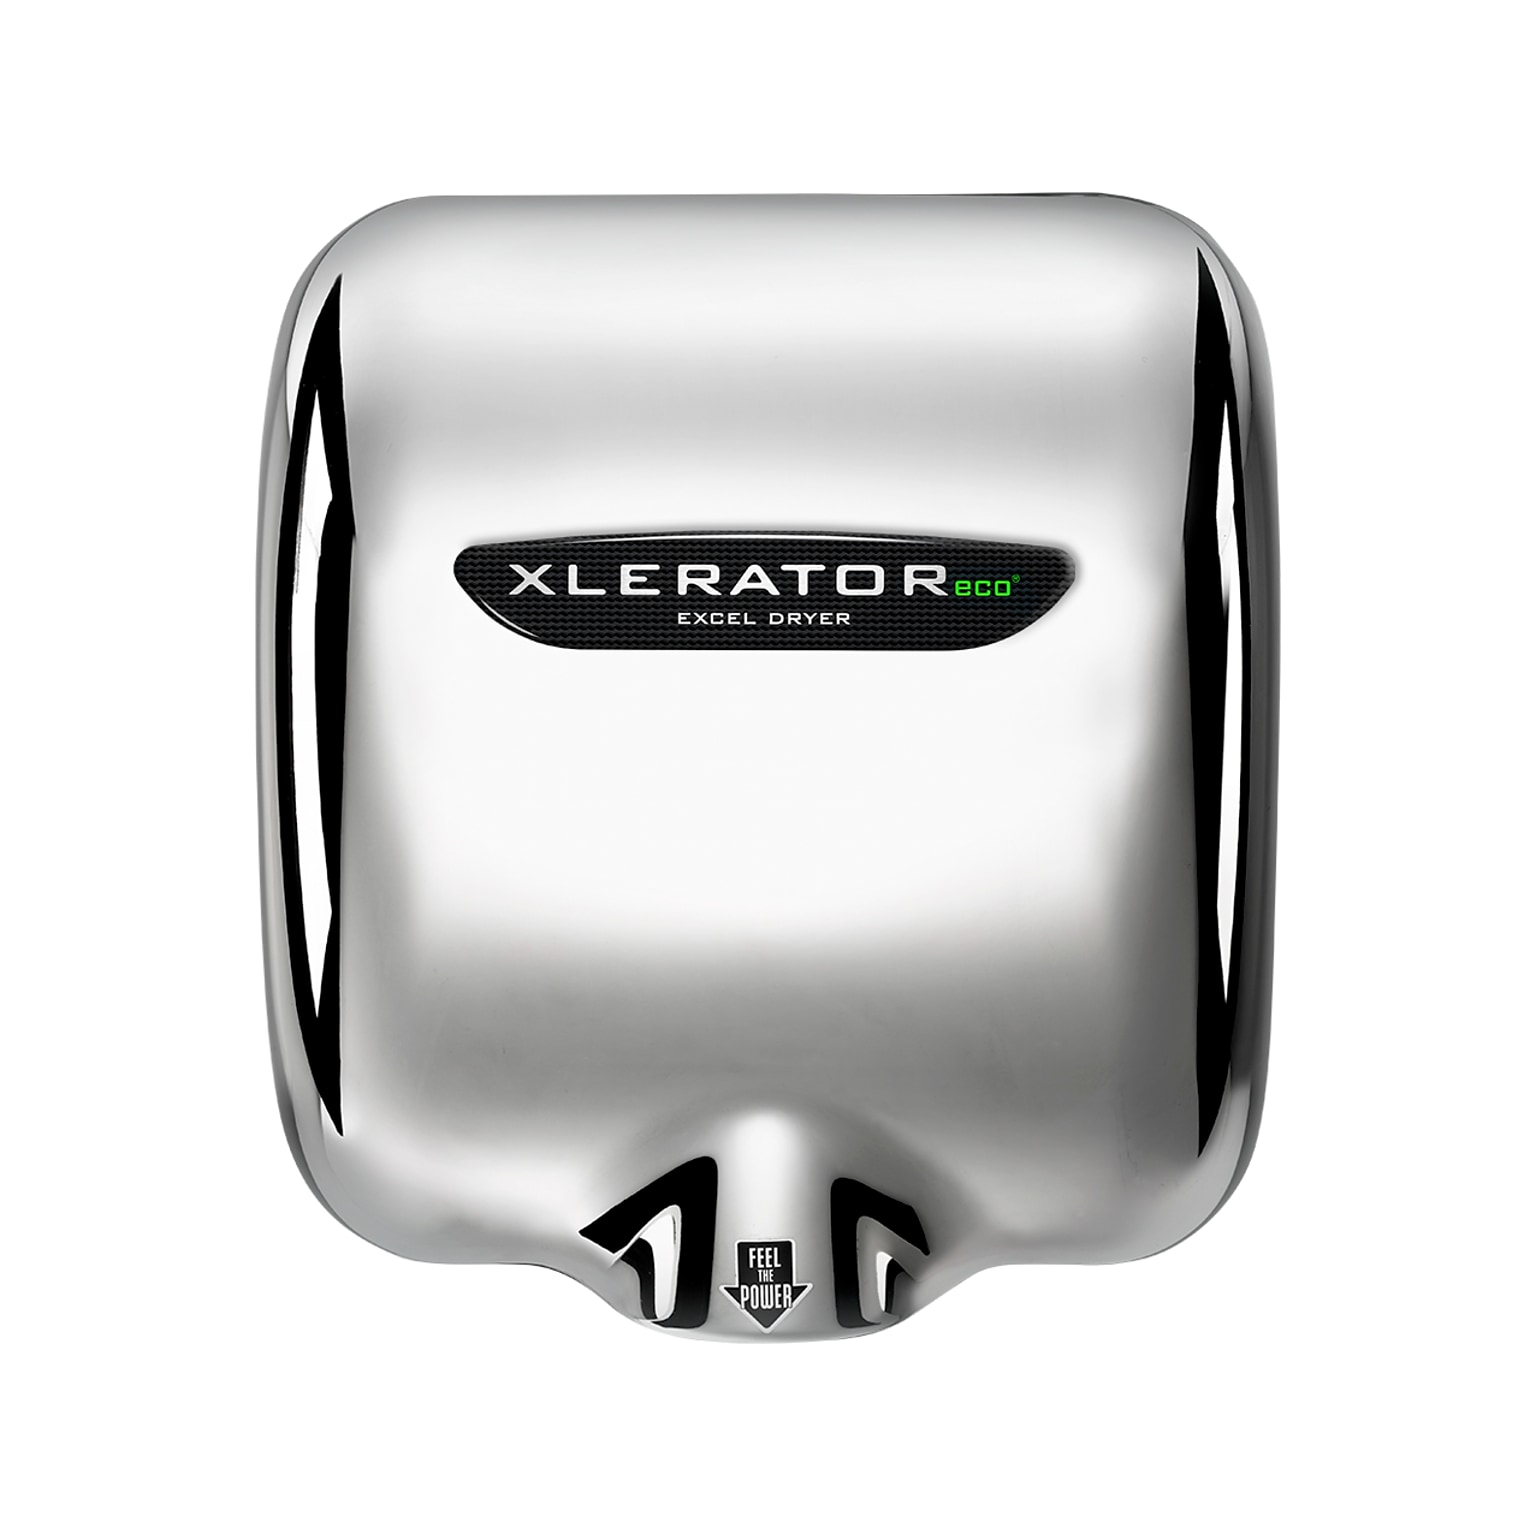 XLERATOReco 110-120V Automatic Hand Dryer, Chrome Plated (701161)